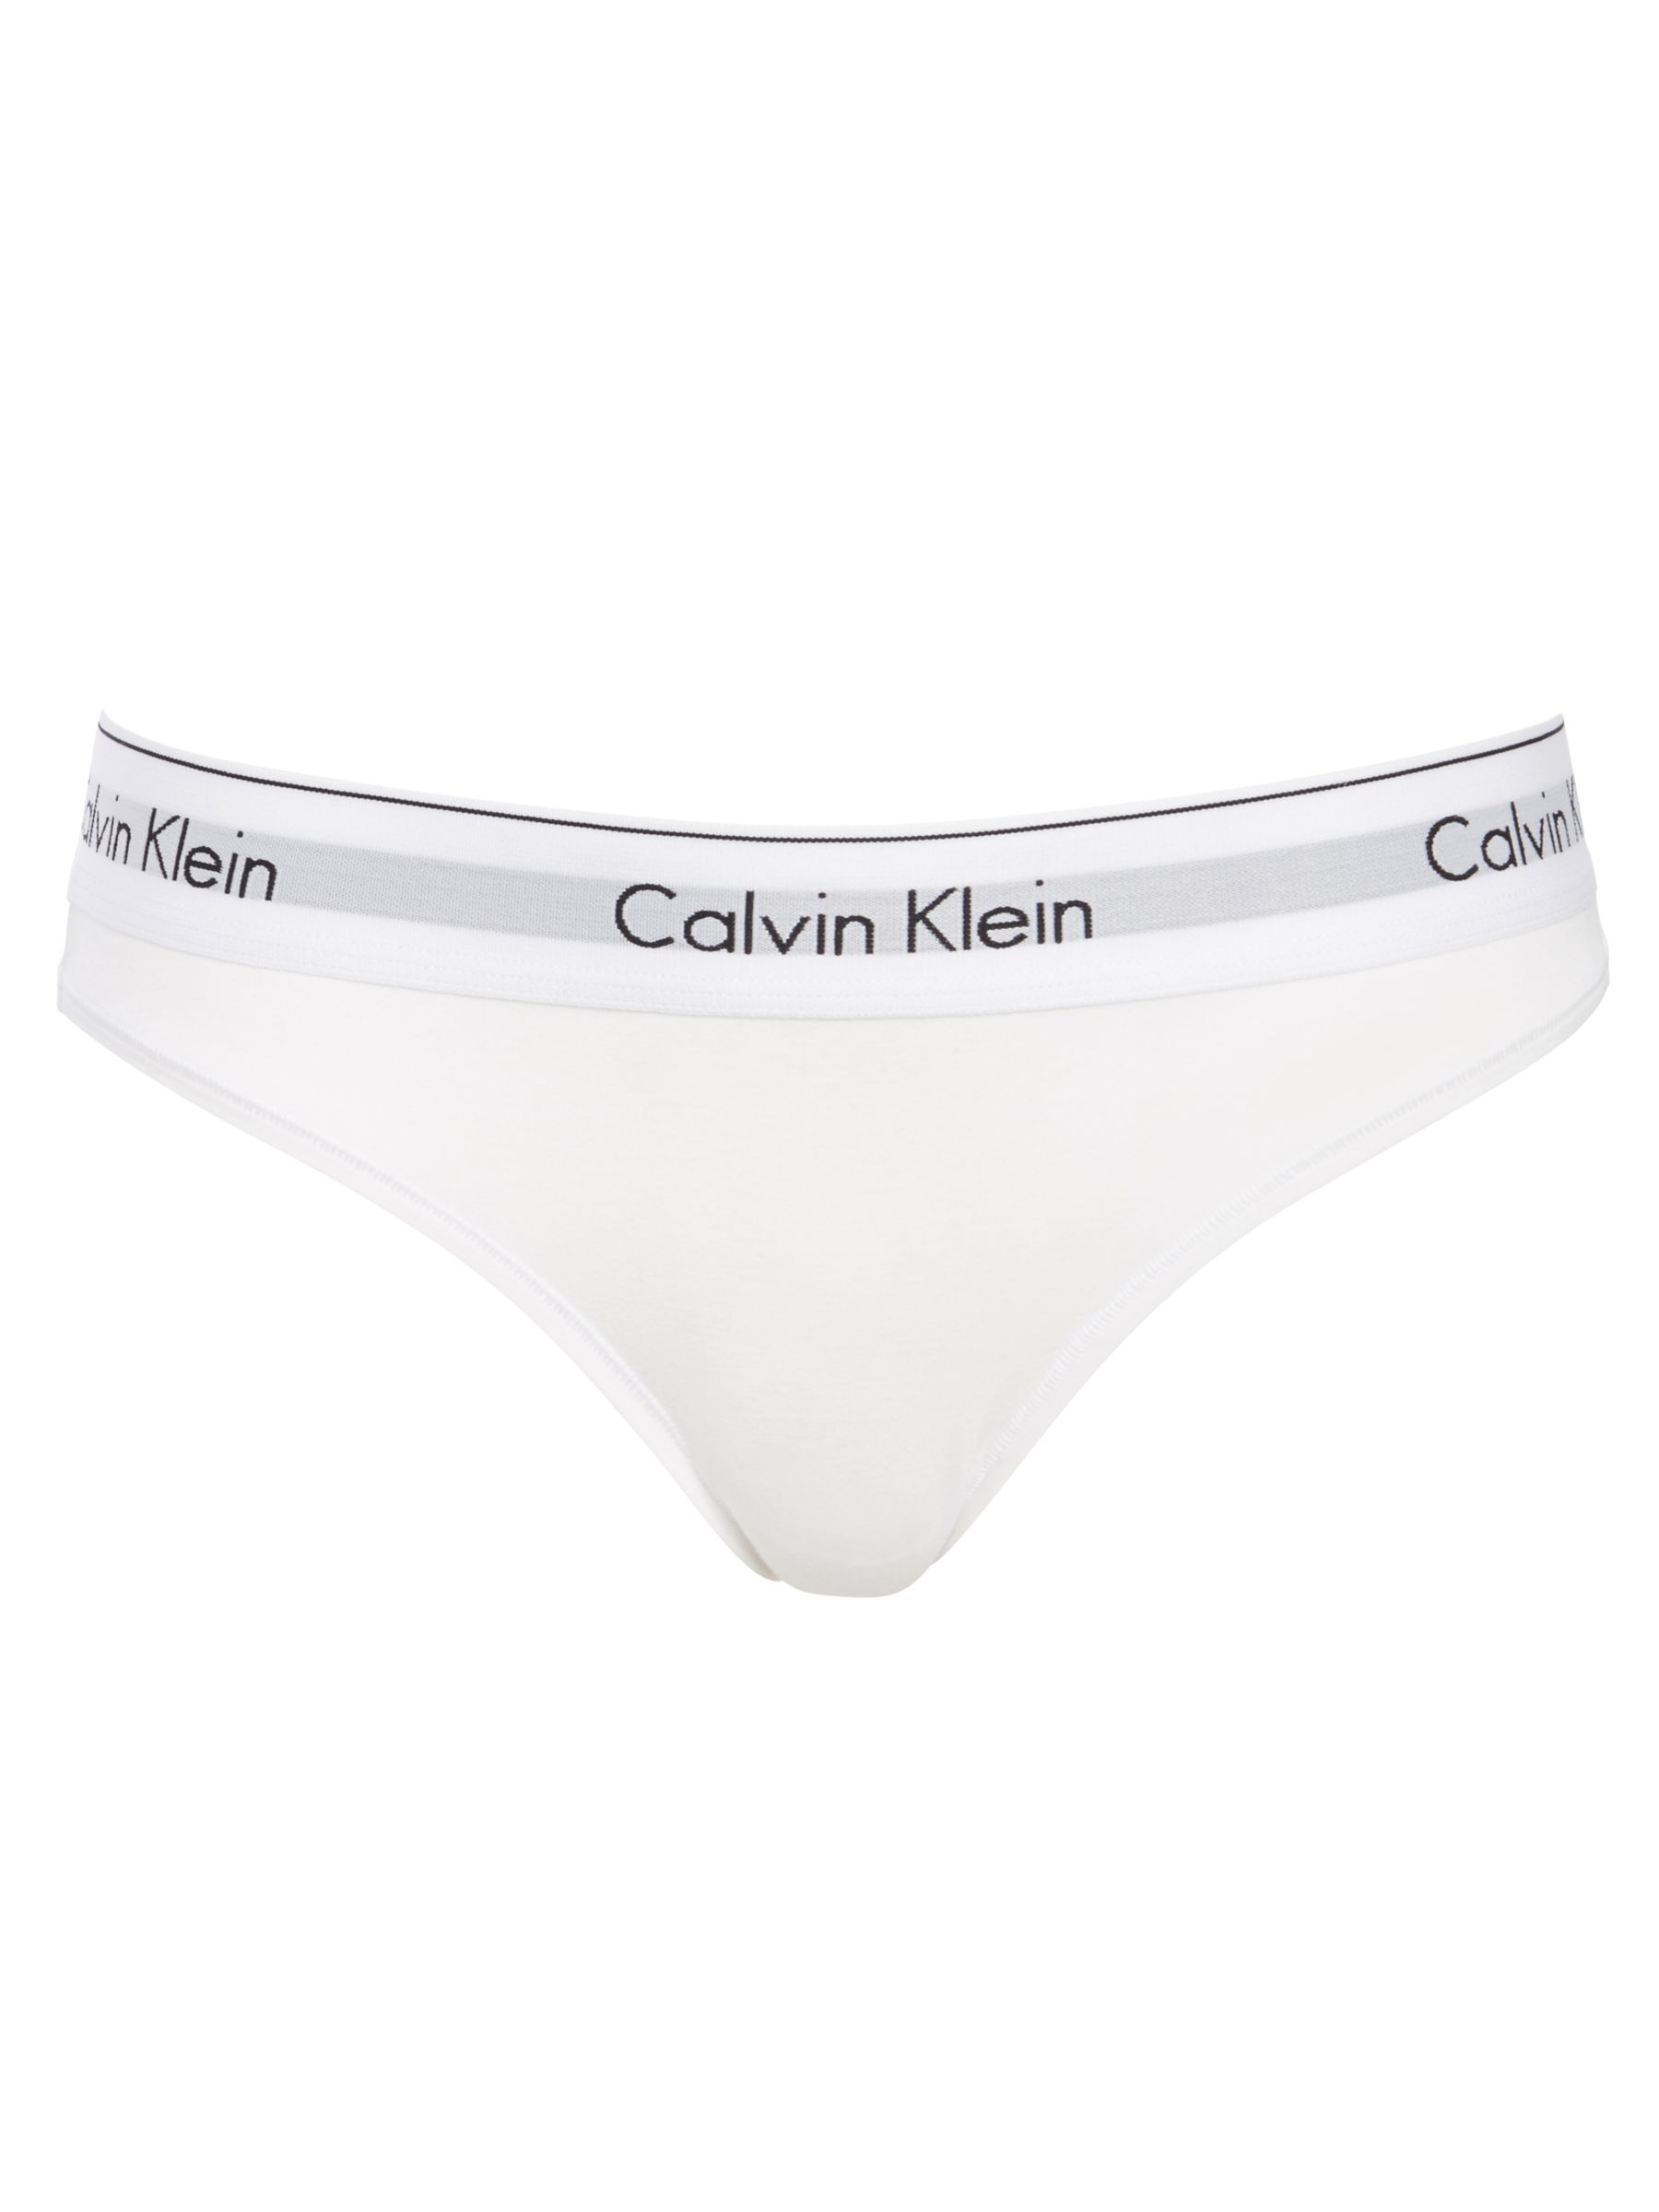 Calvin Klein Underwear Modern Cotton Bikini Cut Briefs At John Lewis And Partners